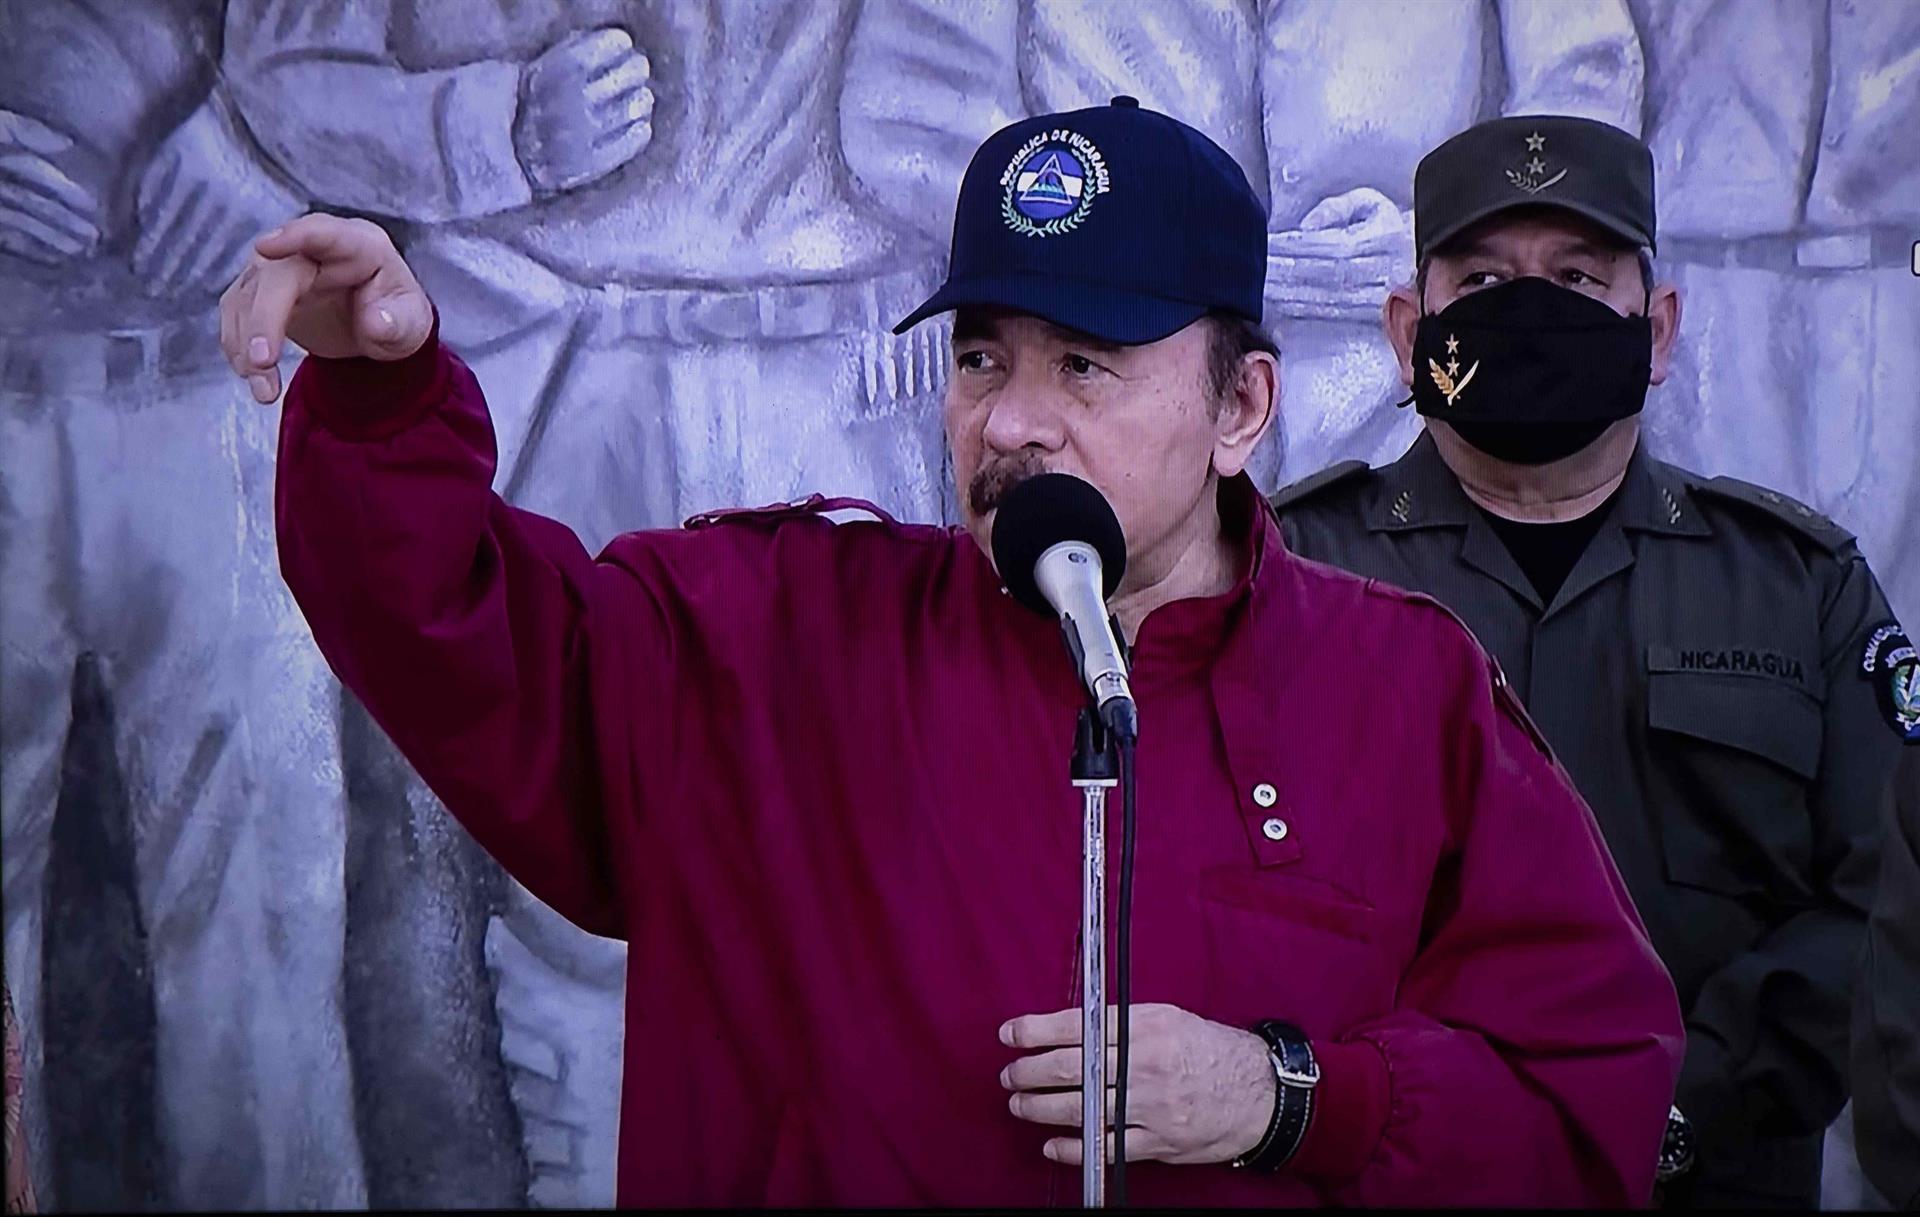 Régimen de Nicaragua amenaza con arrestar a opositores que critican a Ortega en redes sociales